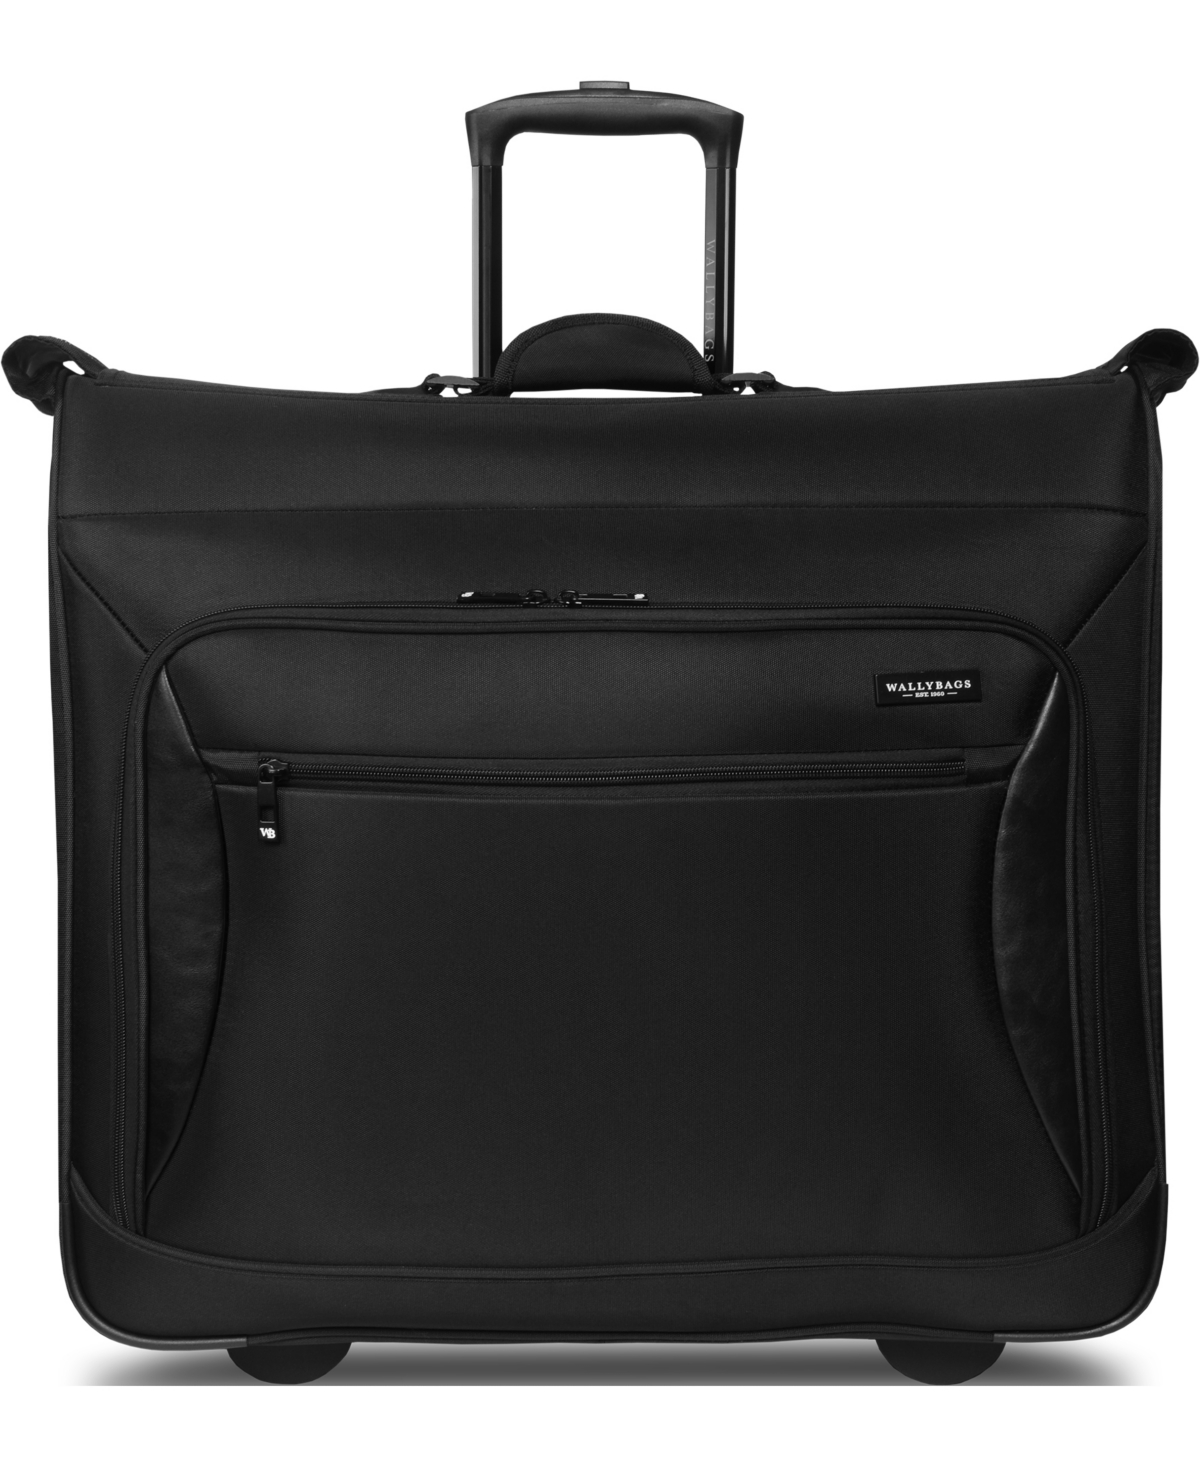 45" Premium Rolling Garment Bag with Multiple Pockets - Black